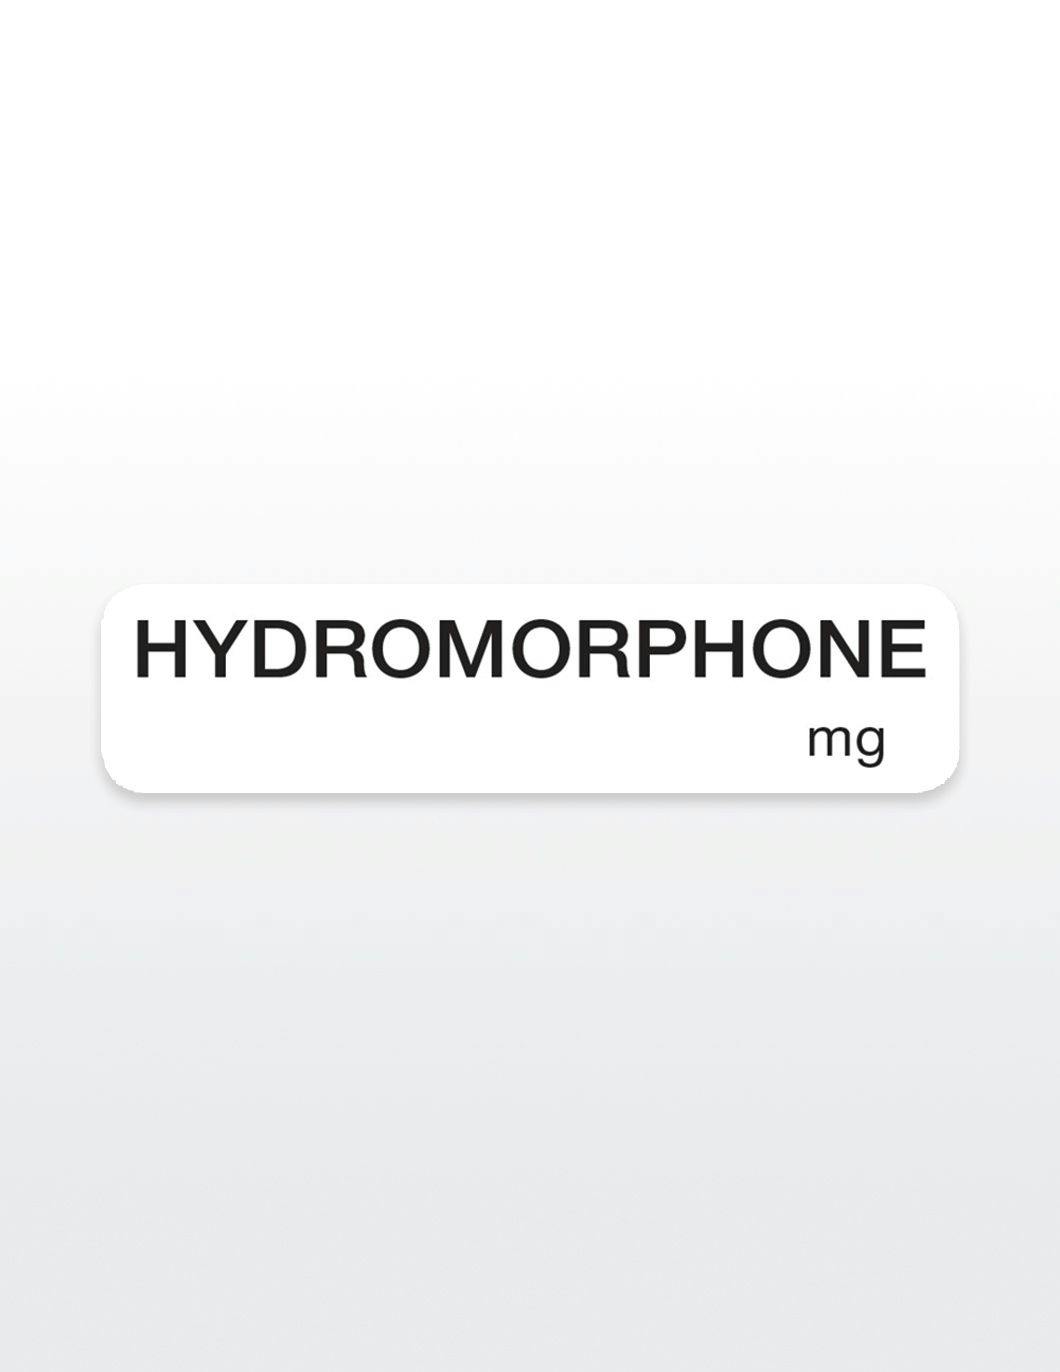 hydromorphone-drug-syringe-stickers